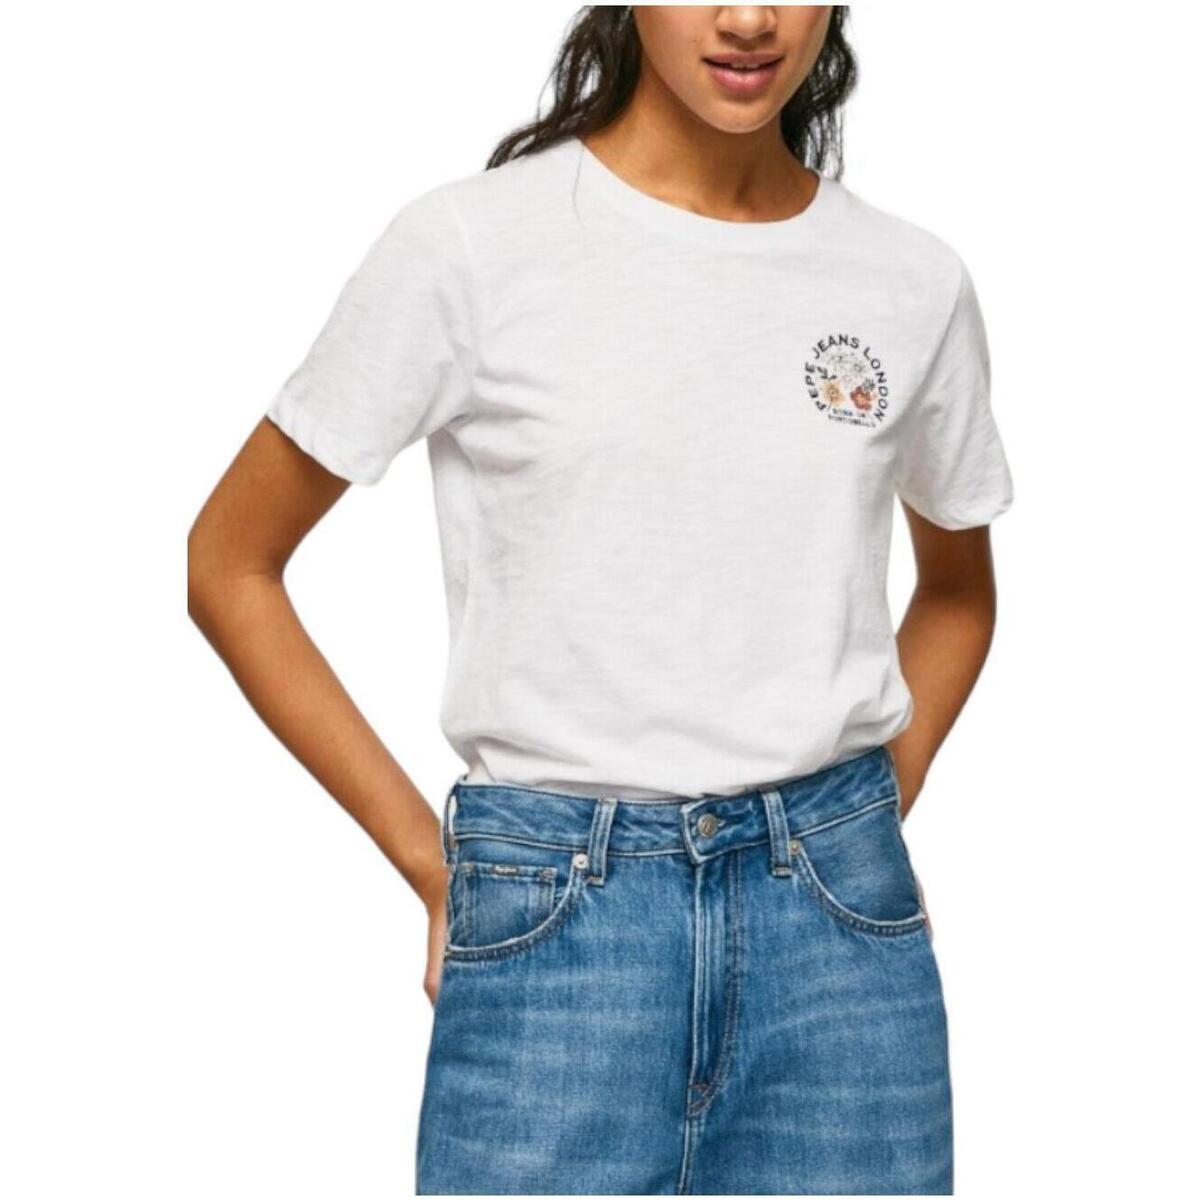 T-shirt με κοντά μανίκια Pepe jeans –